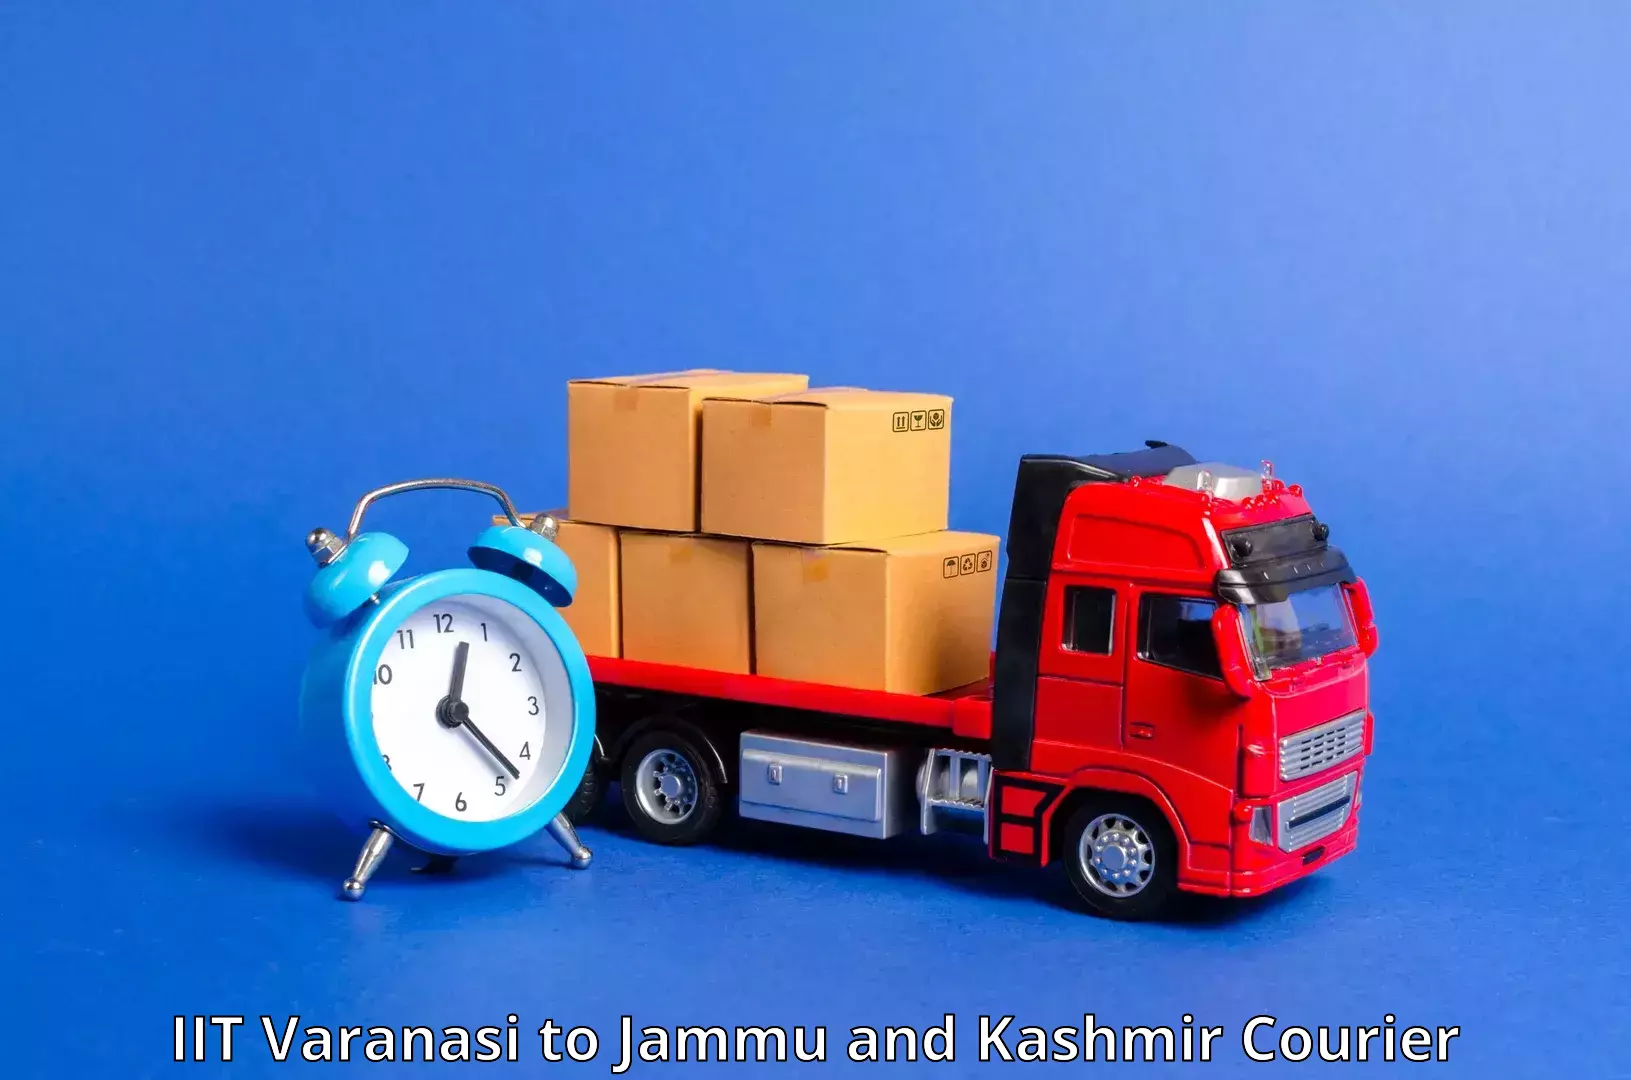 Express delivery capabilities IIT Varanasi to Shopian